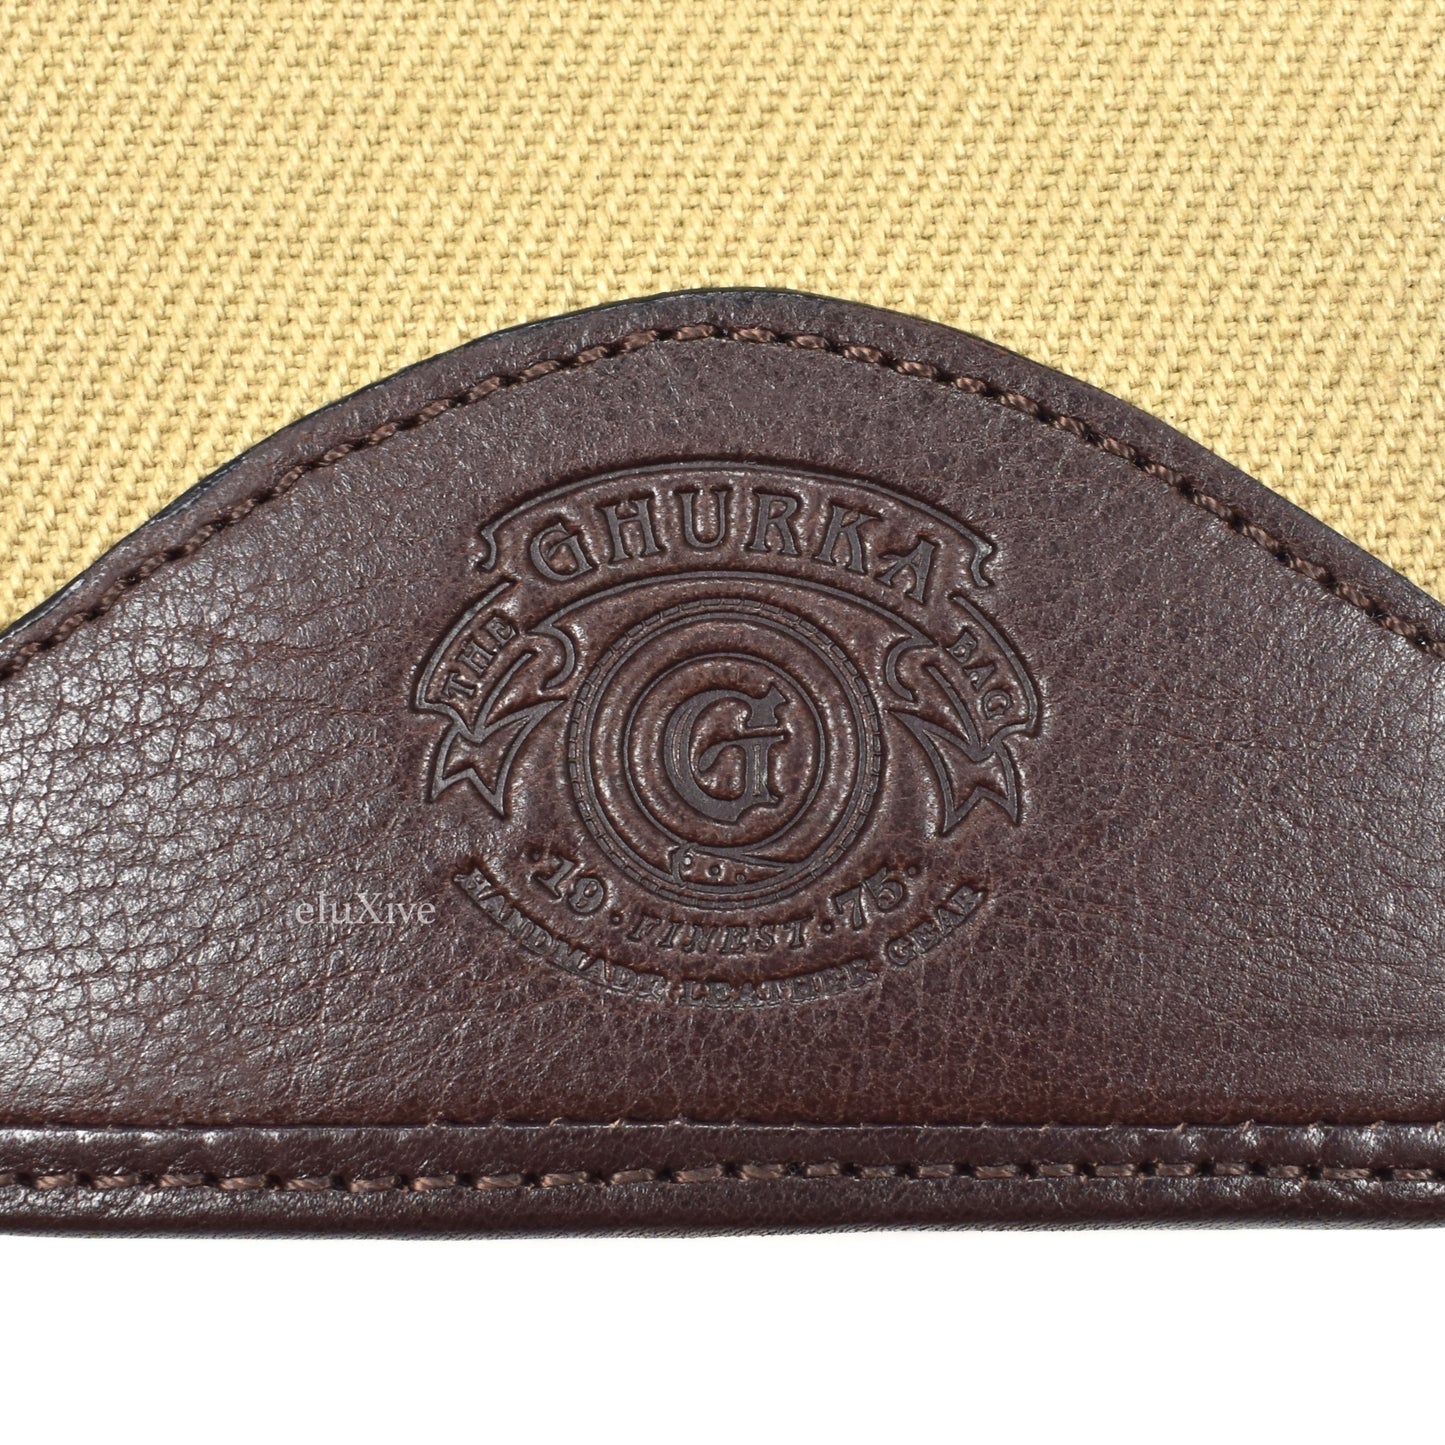 Ghurka - Leather & Canvas Classic Bifold Wallet (Khaki)